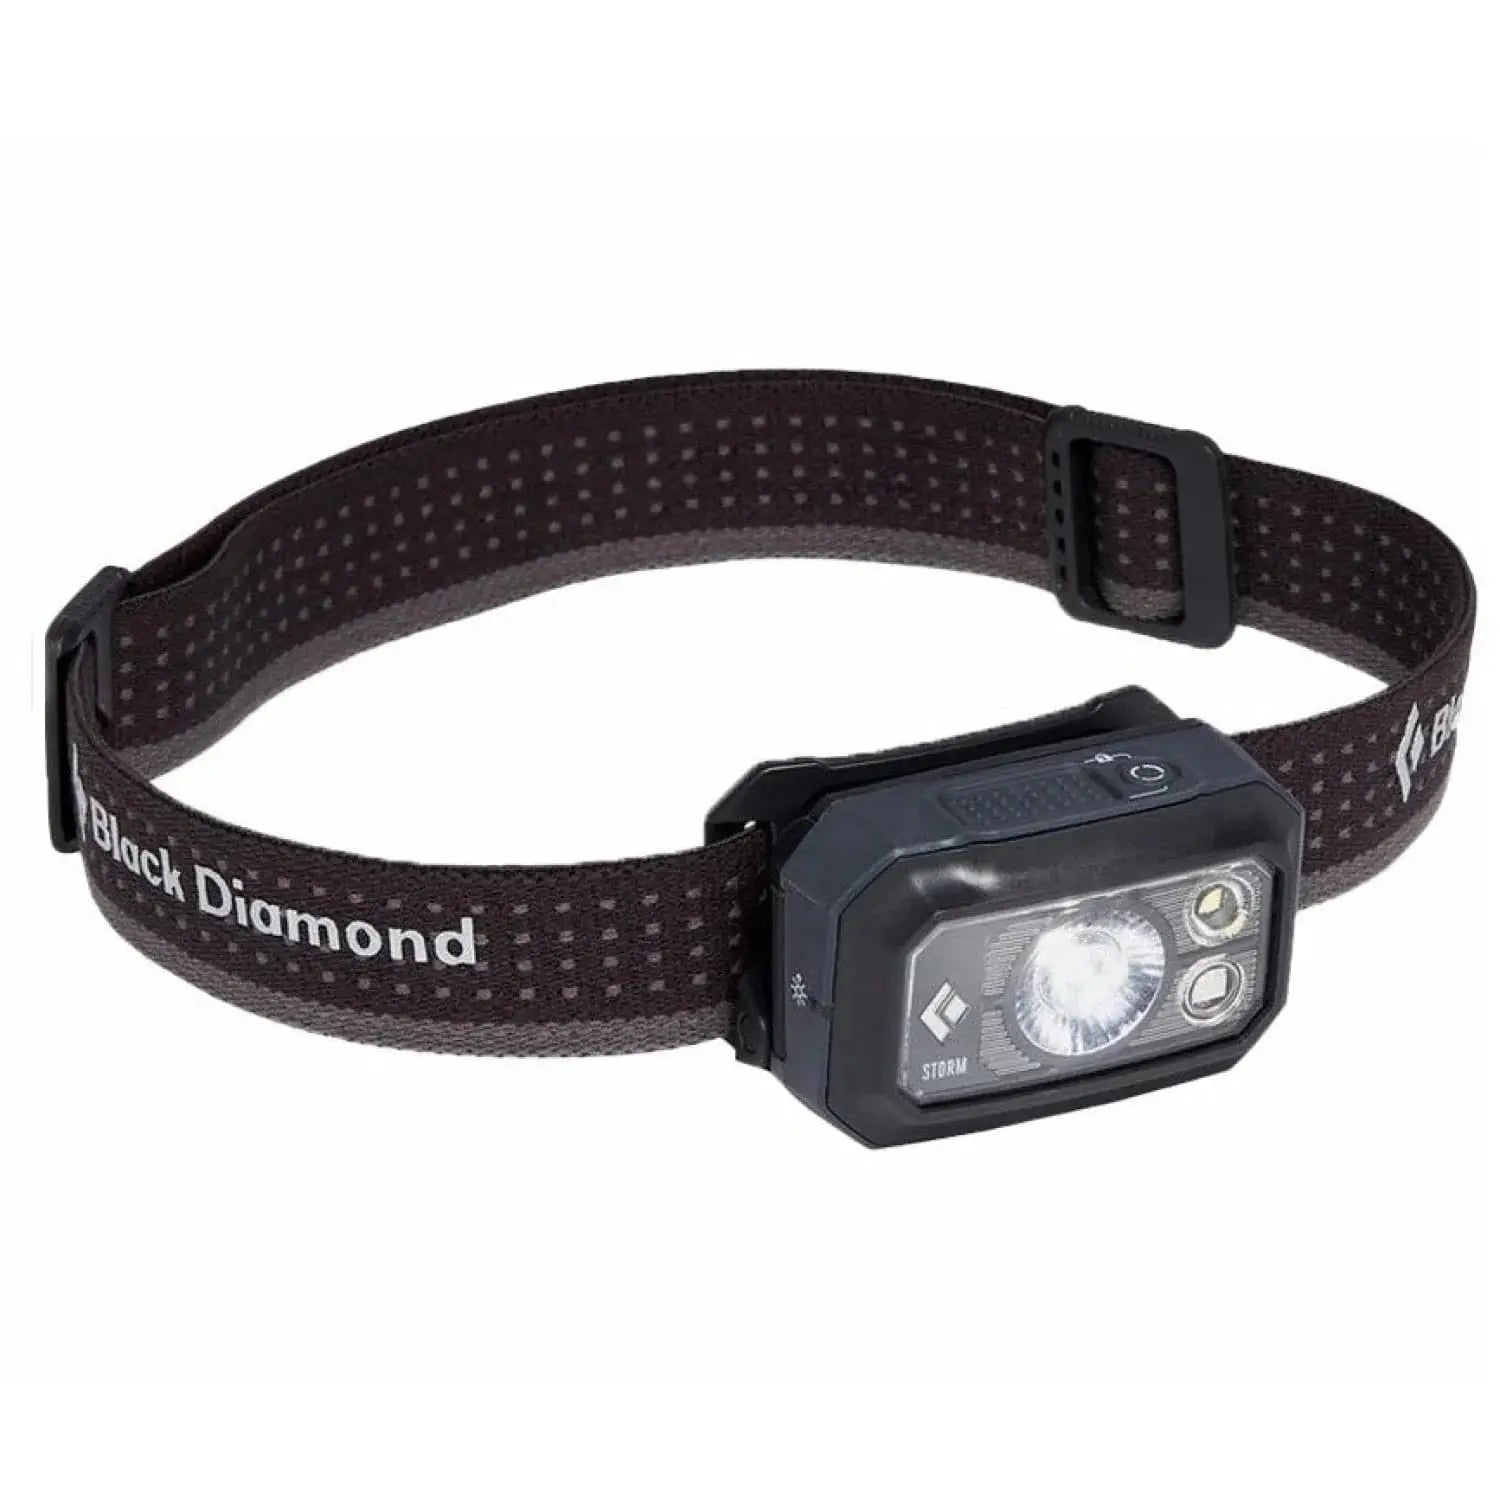 Black Diamond Spot 400 Headlamp shown in the Graphite color option.